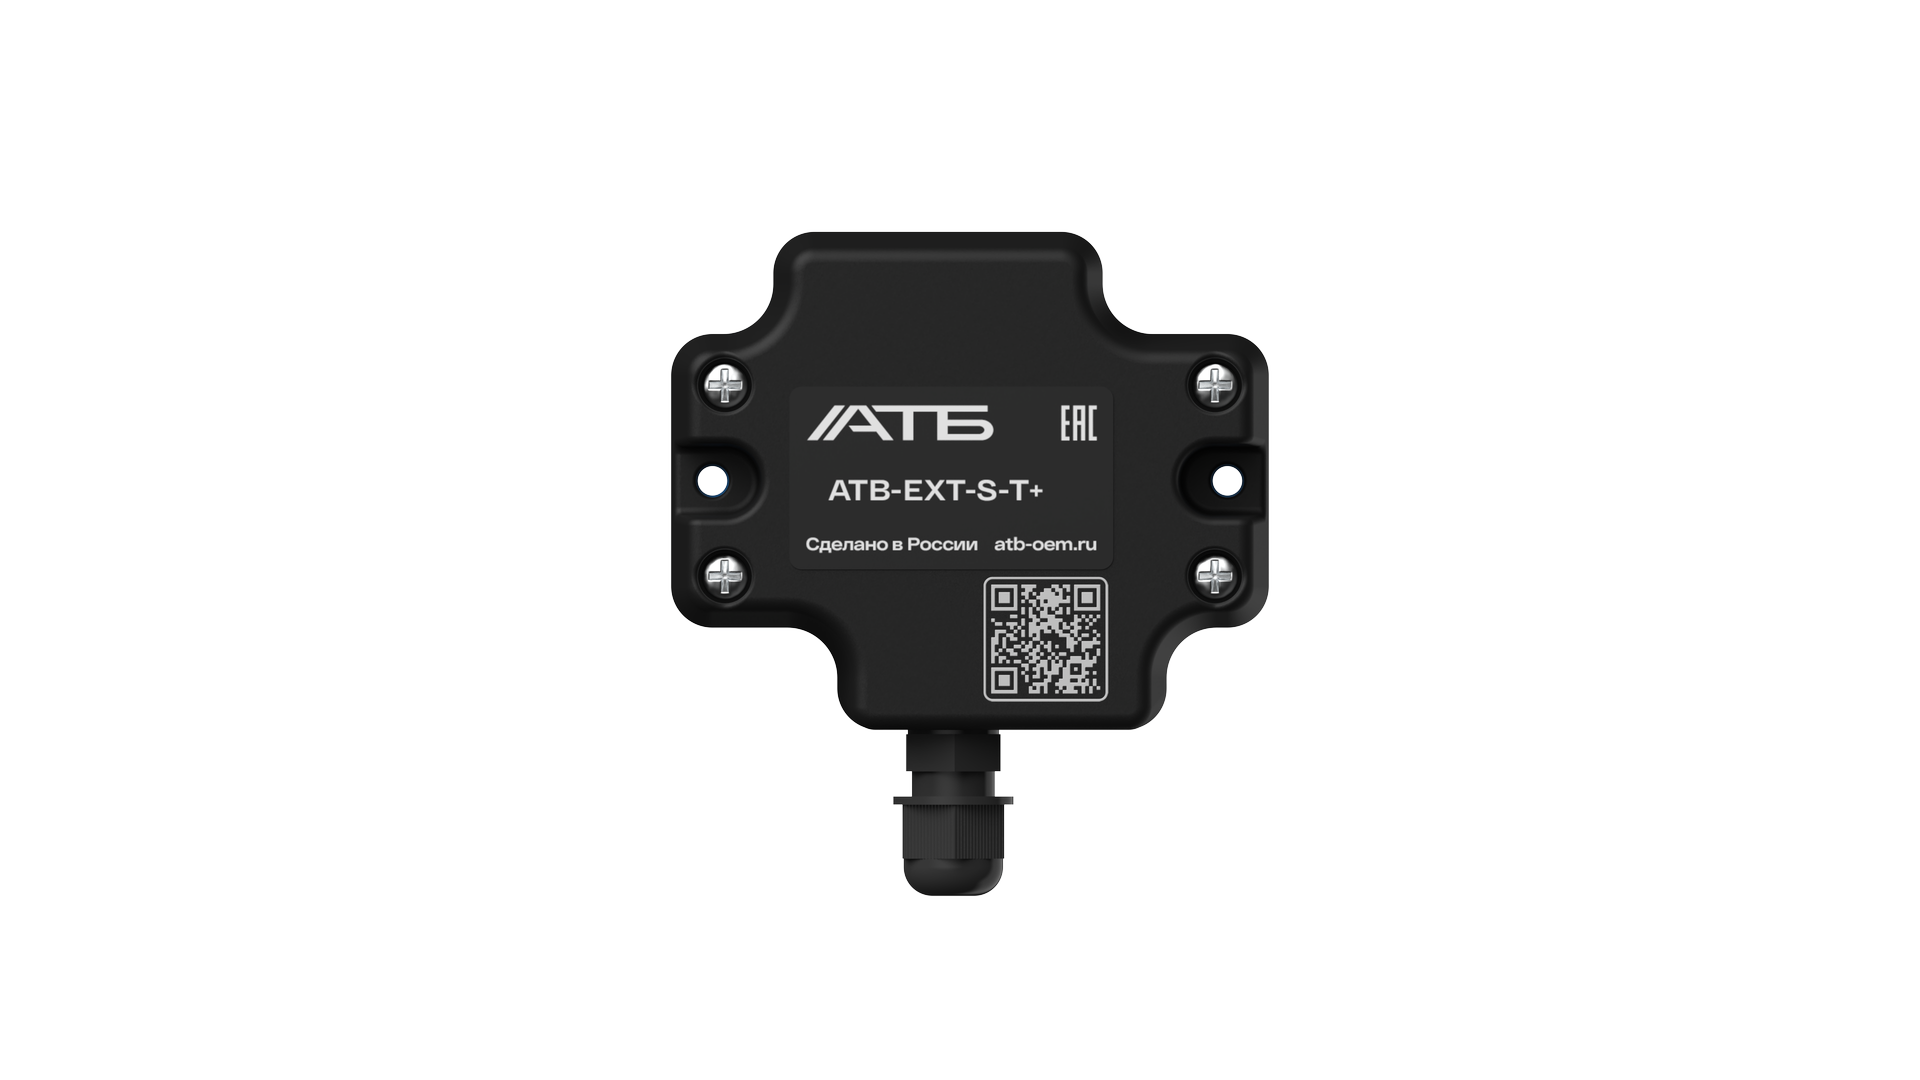 ATB-EXT-S-T+ Датчик температуры и влажности I2C